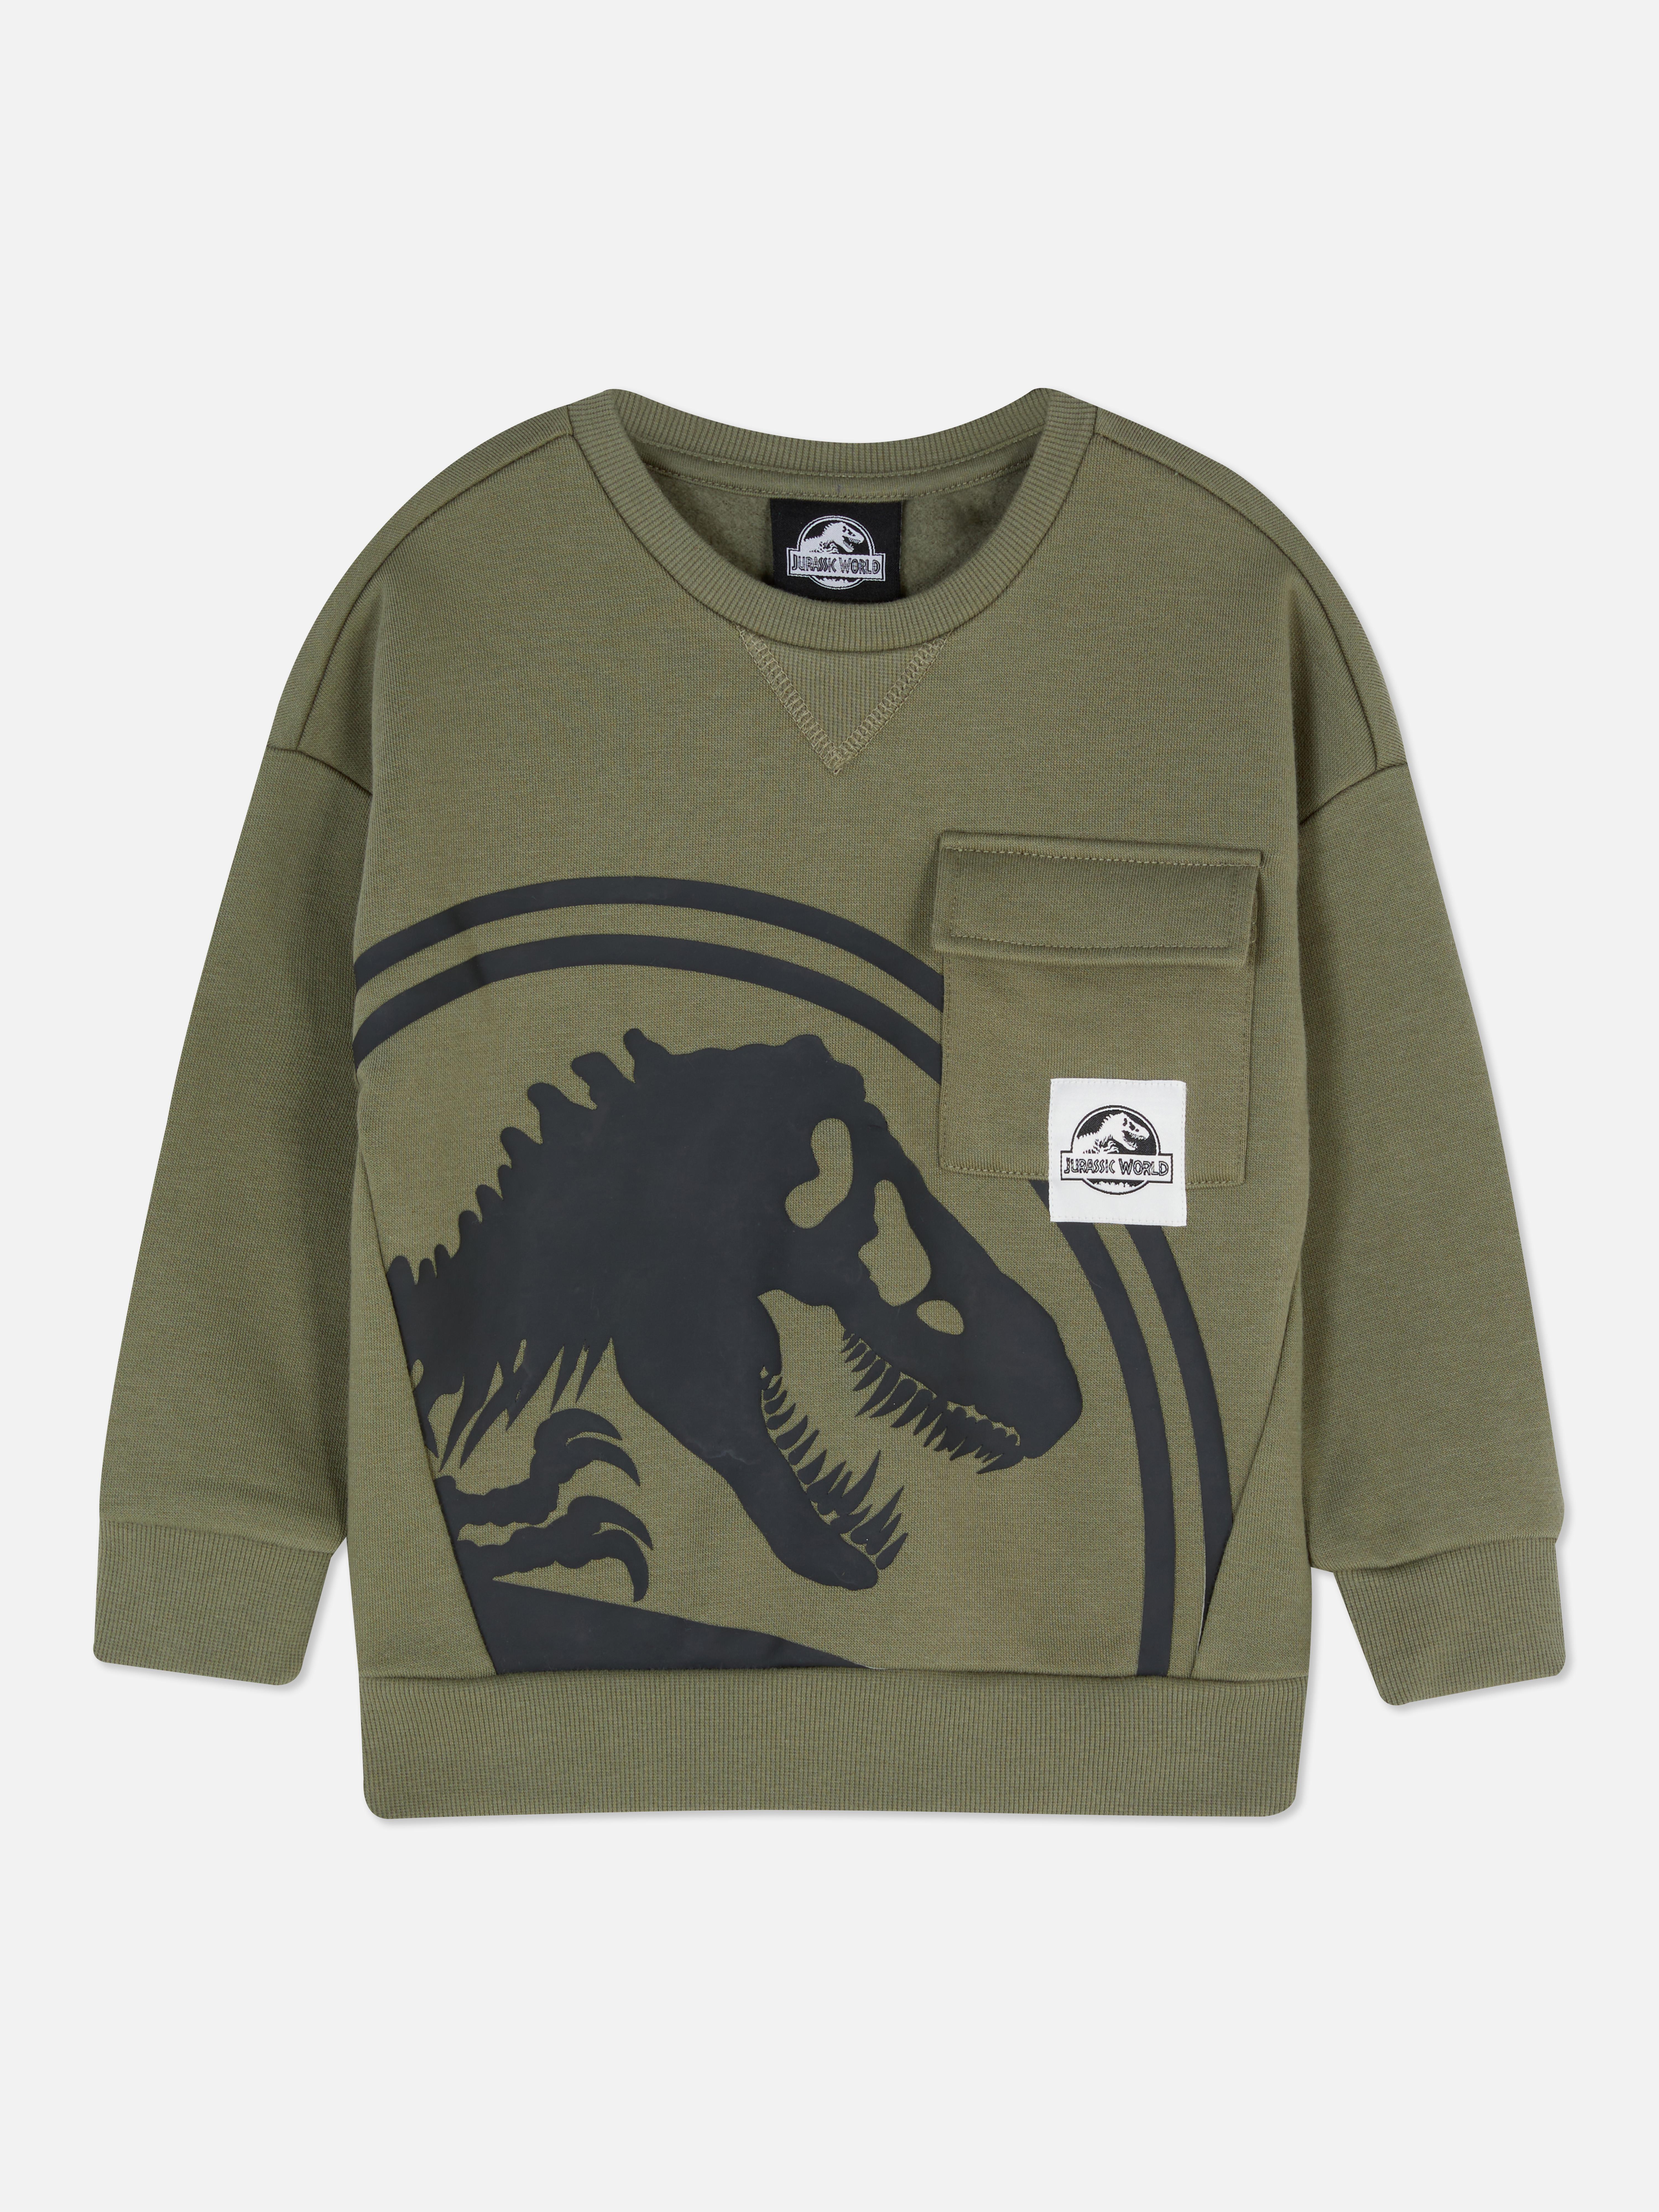 Jurassic World Crew Neck Sweatshirt